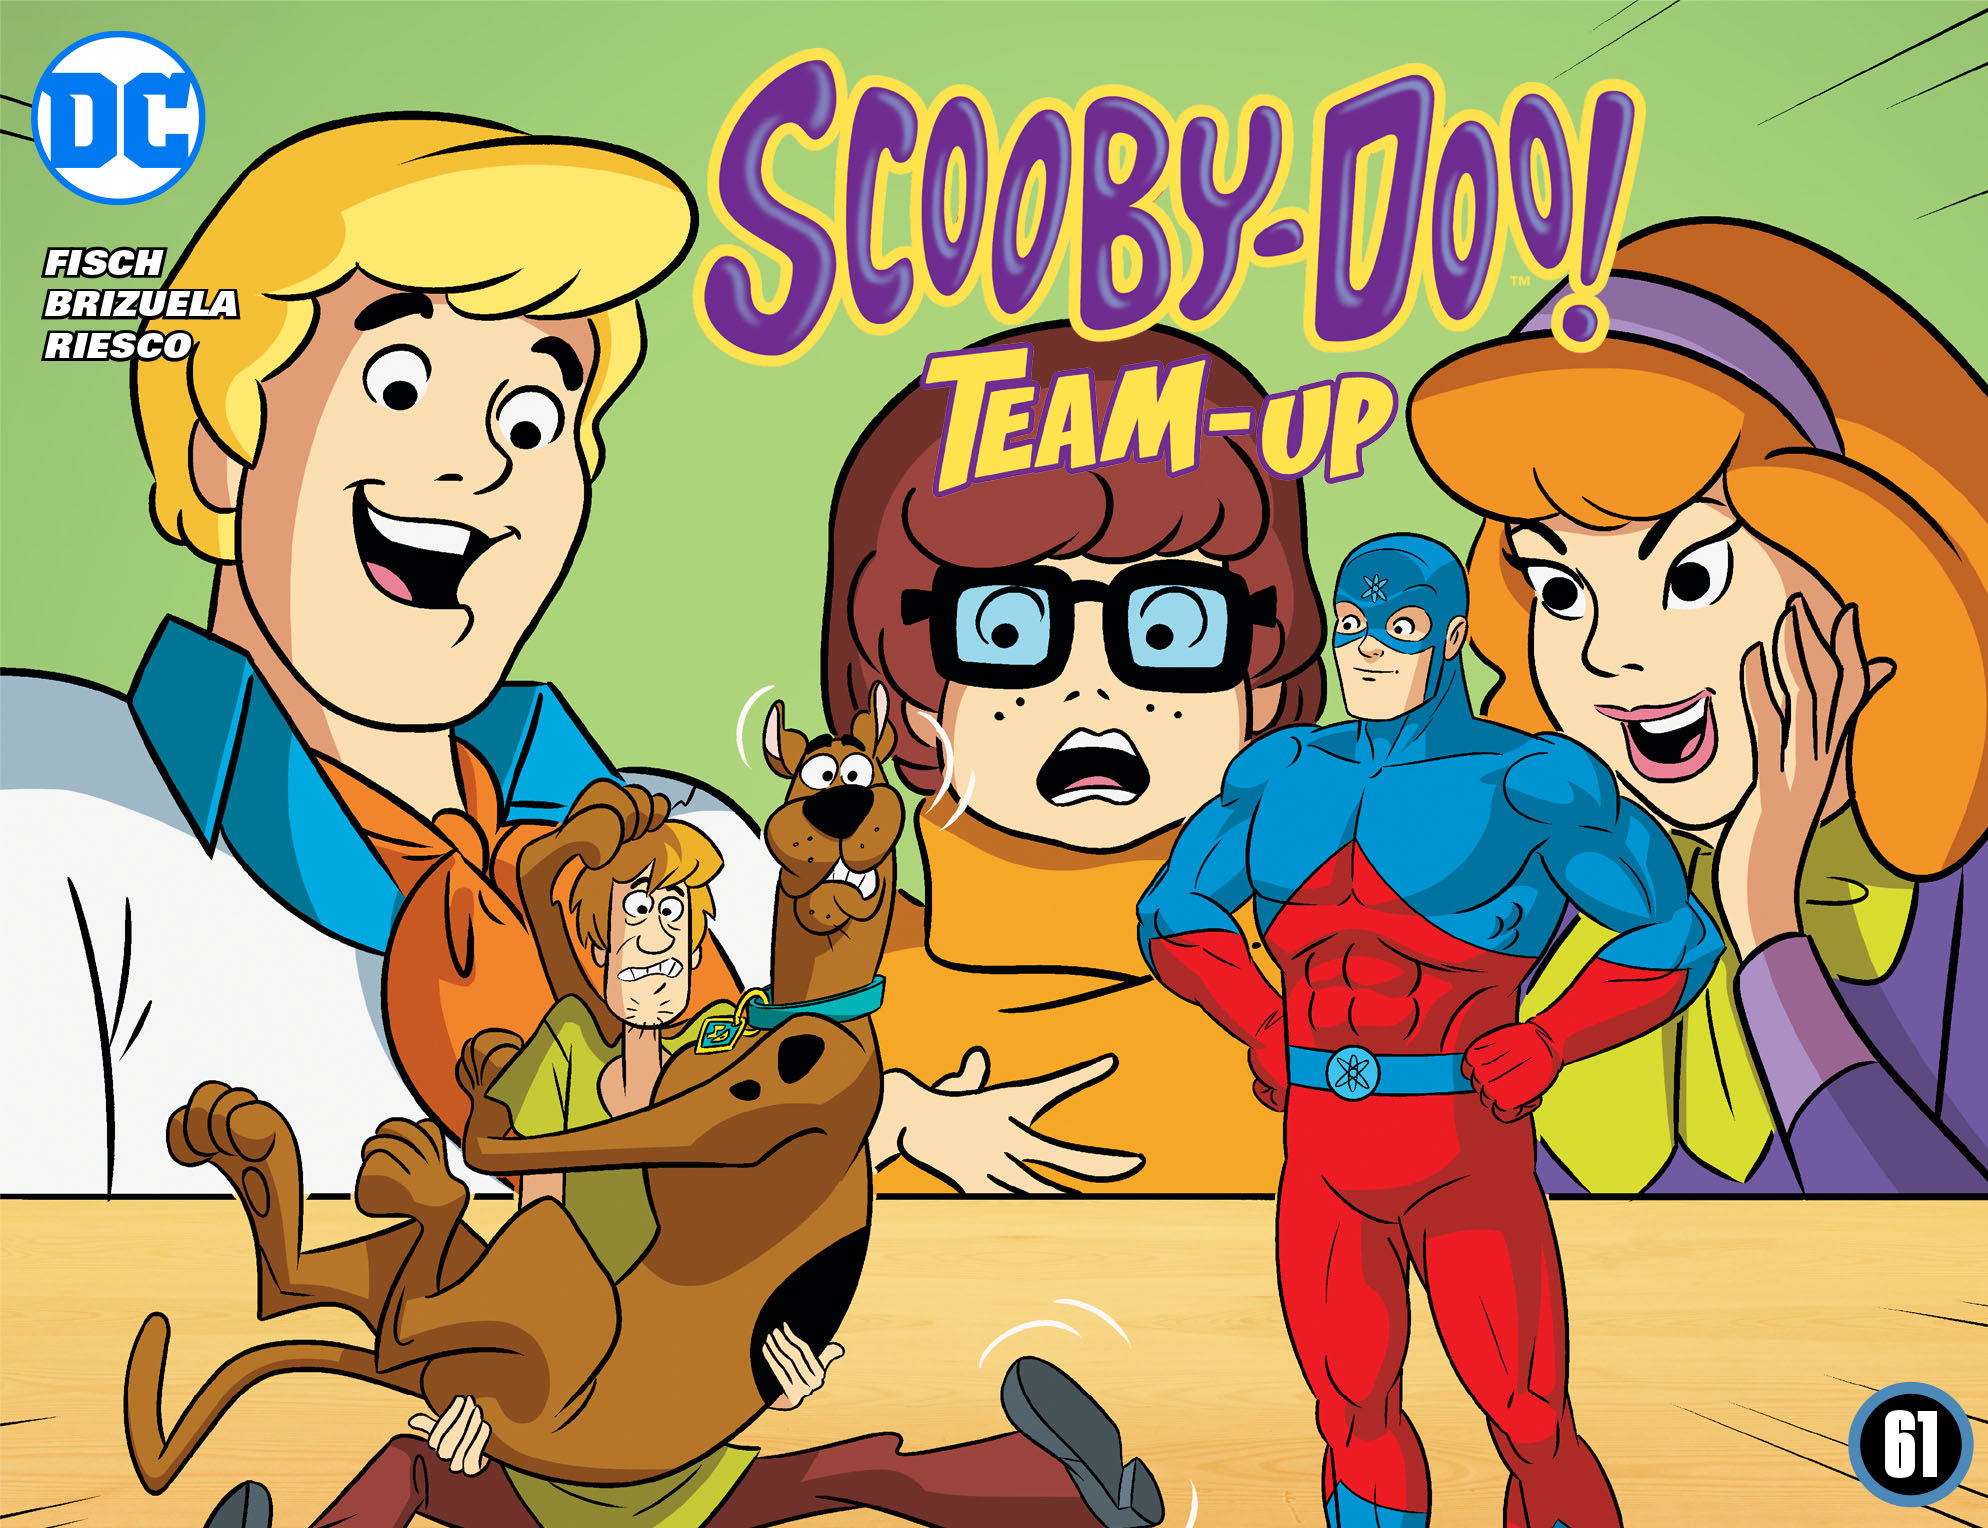 Scooby doo comics. Комикс Скуби Ду. Приключения Скуби Ду. Обложки комиксов Скуби Ду. Комиксы Скуби Ду старые.